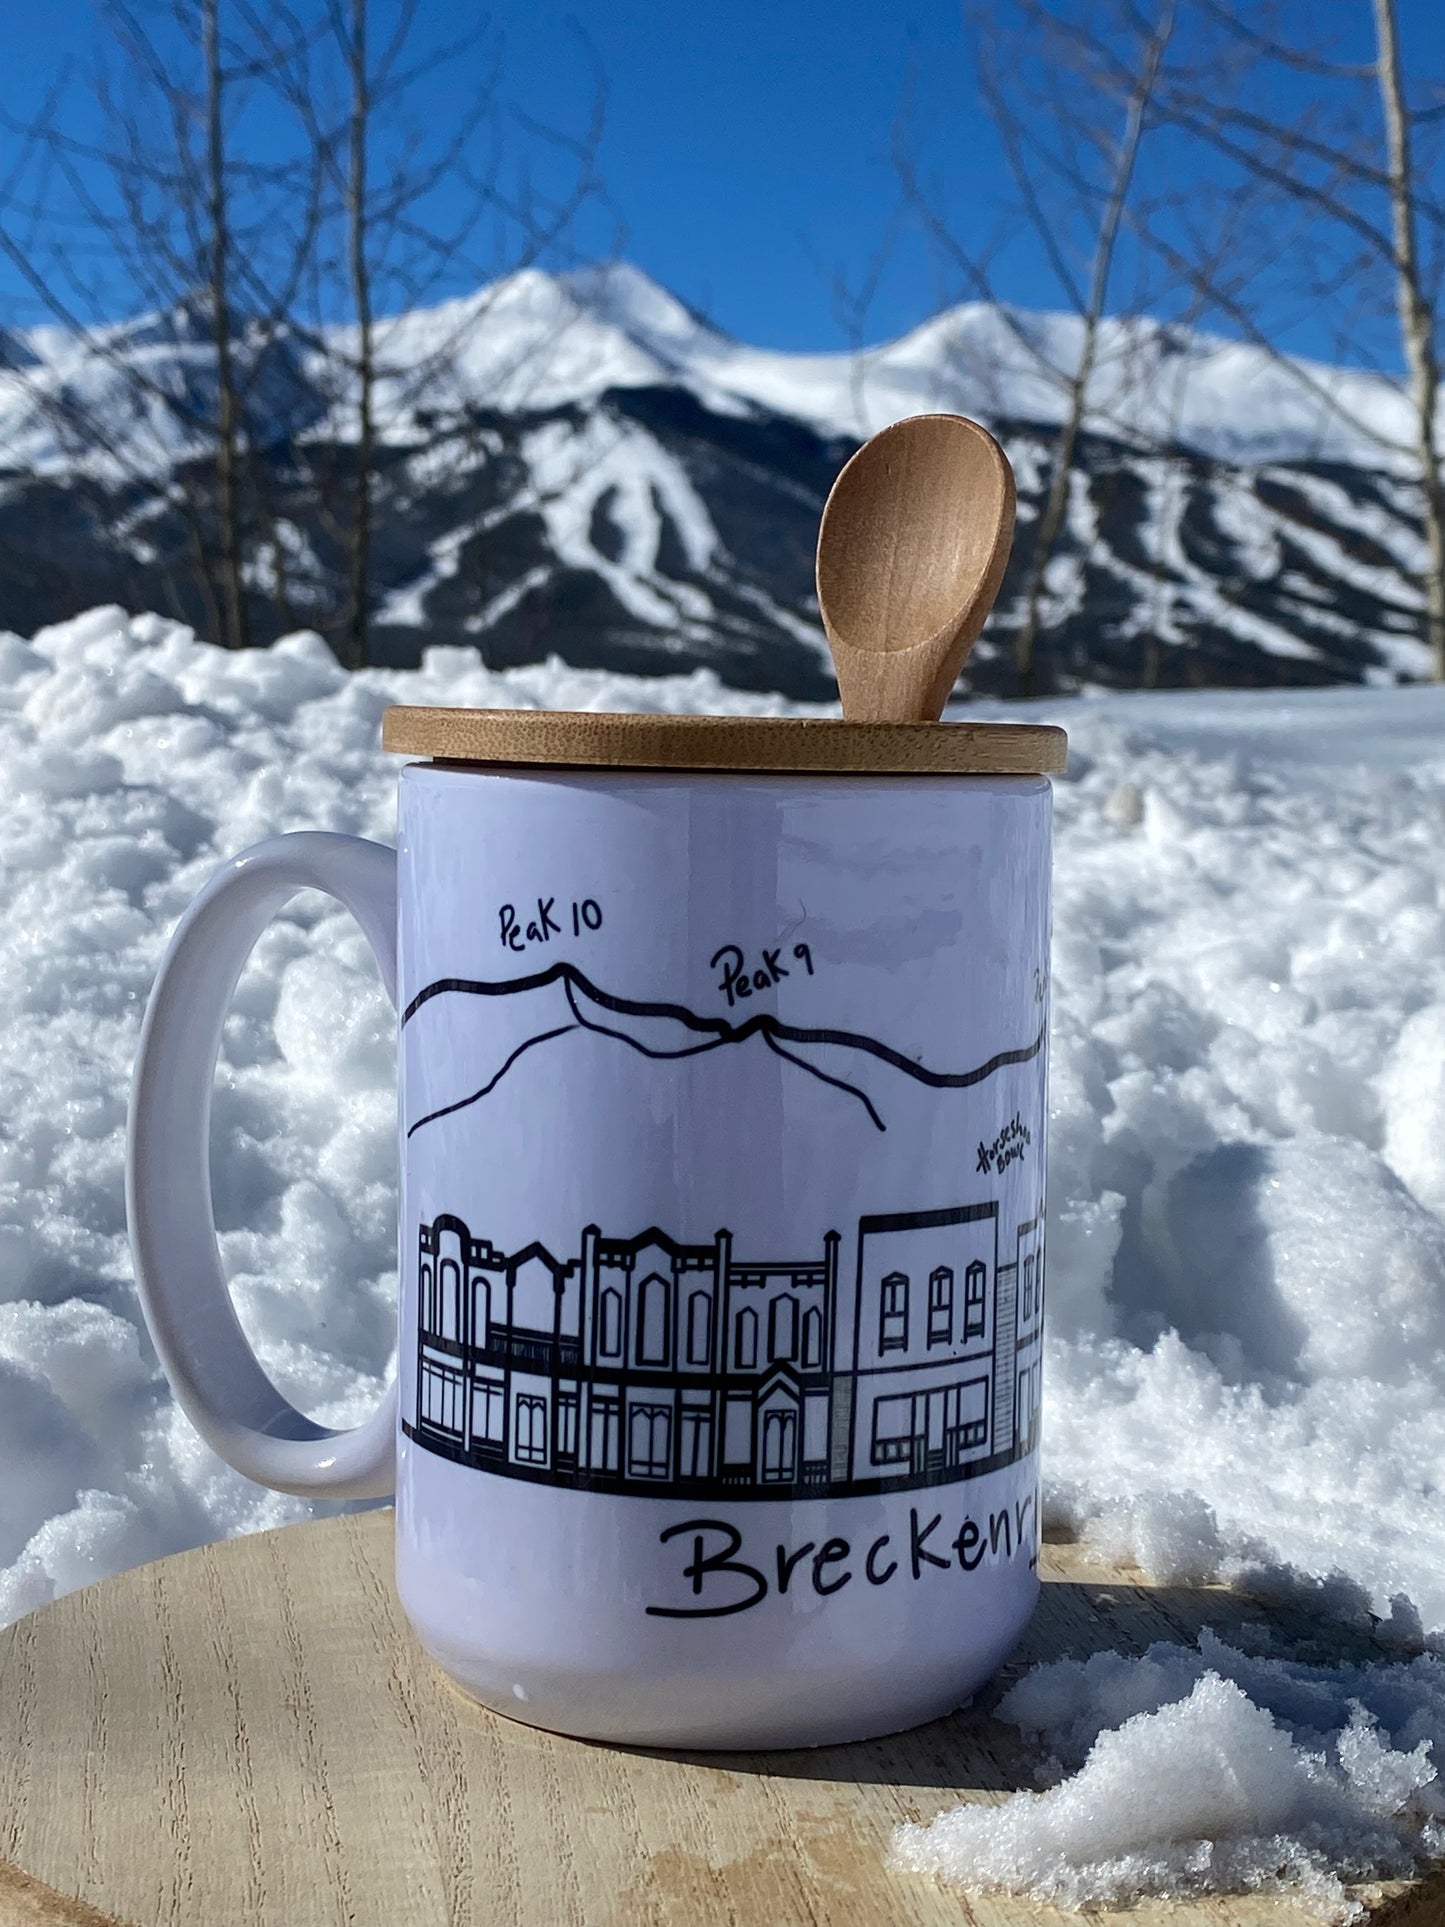 Breckenridge Mug